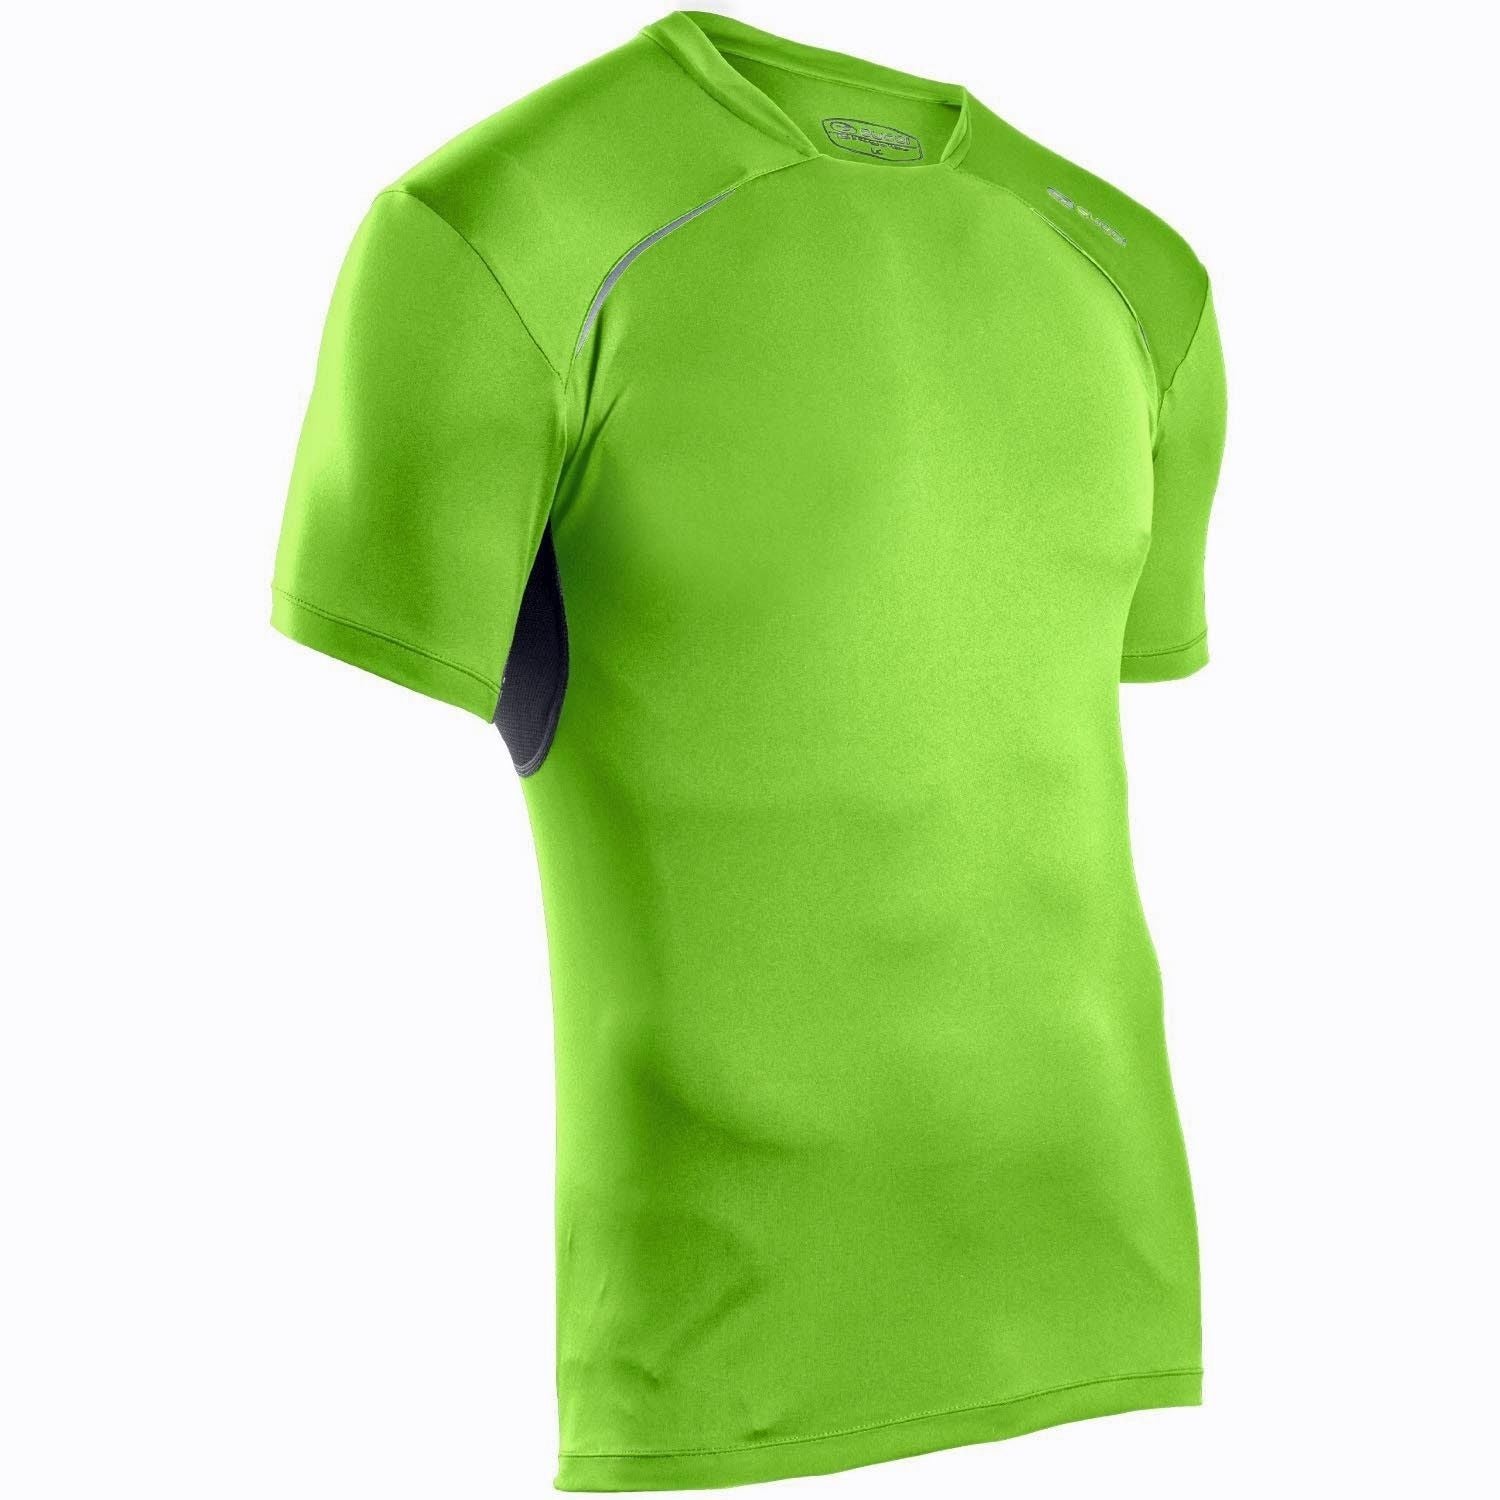 Sugoi Titan 50818U T-Shirt Laufshirt Running Shirt shortsleeves kurzarm Lauf Top